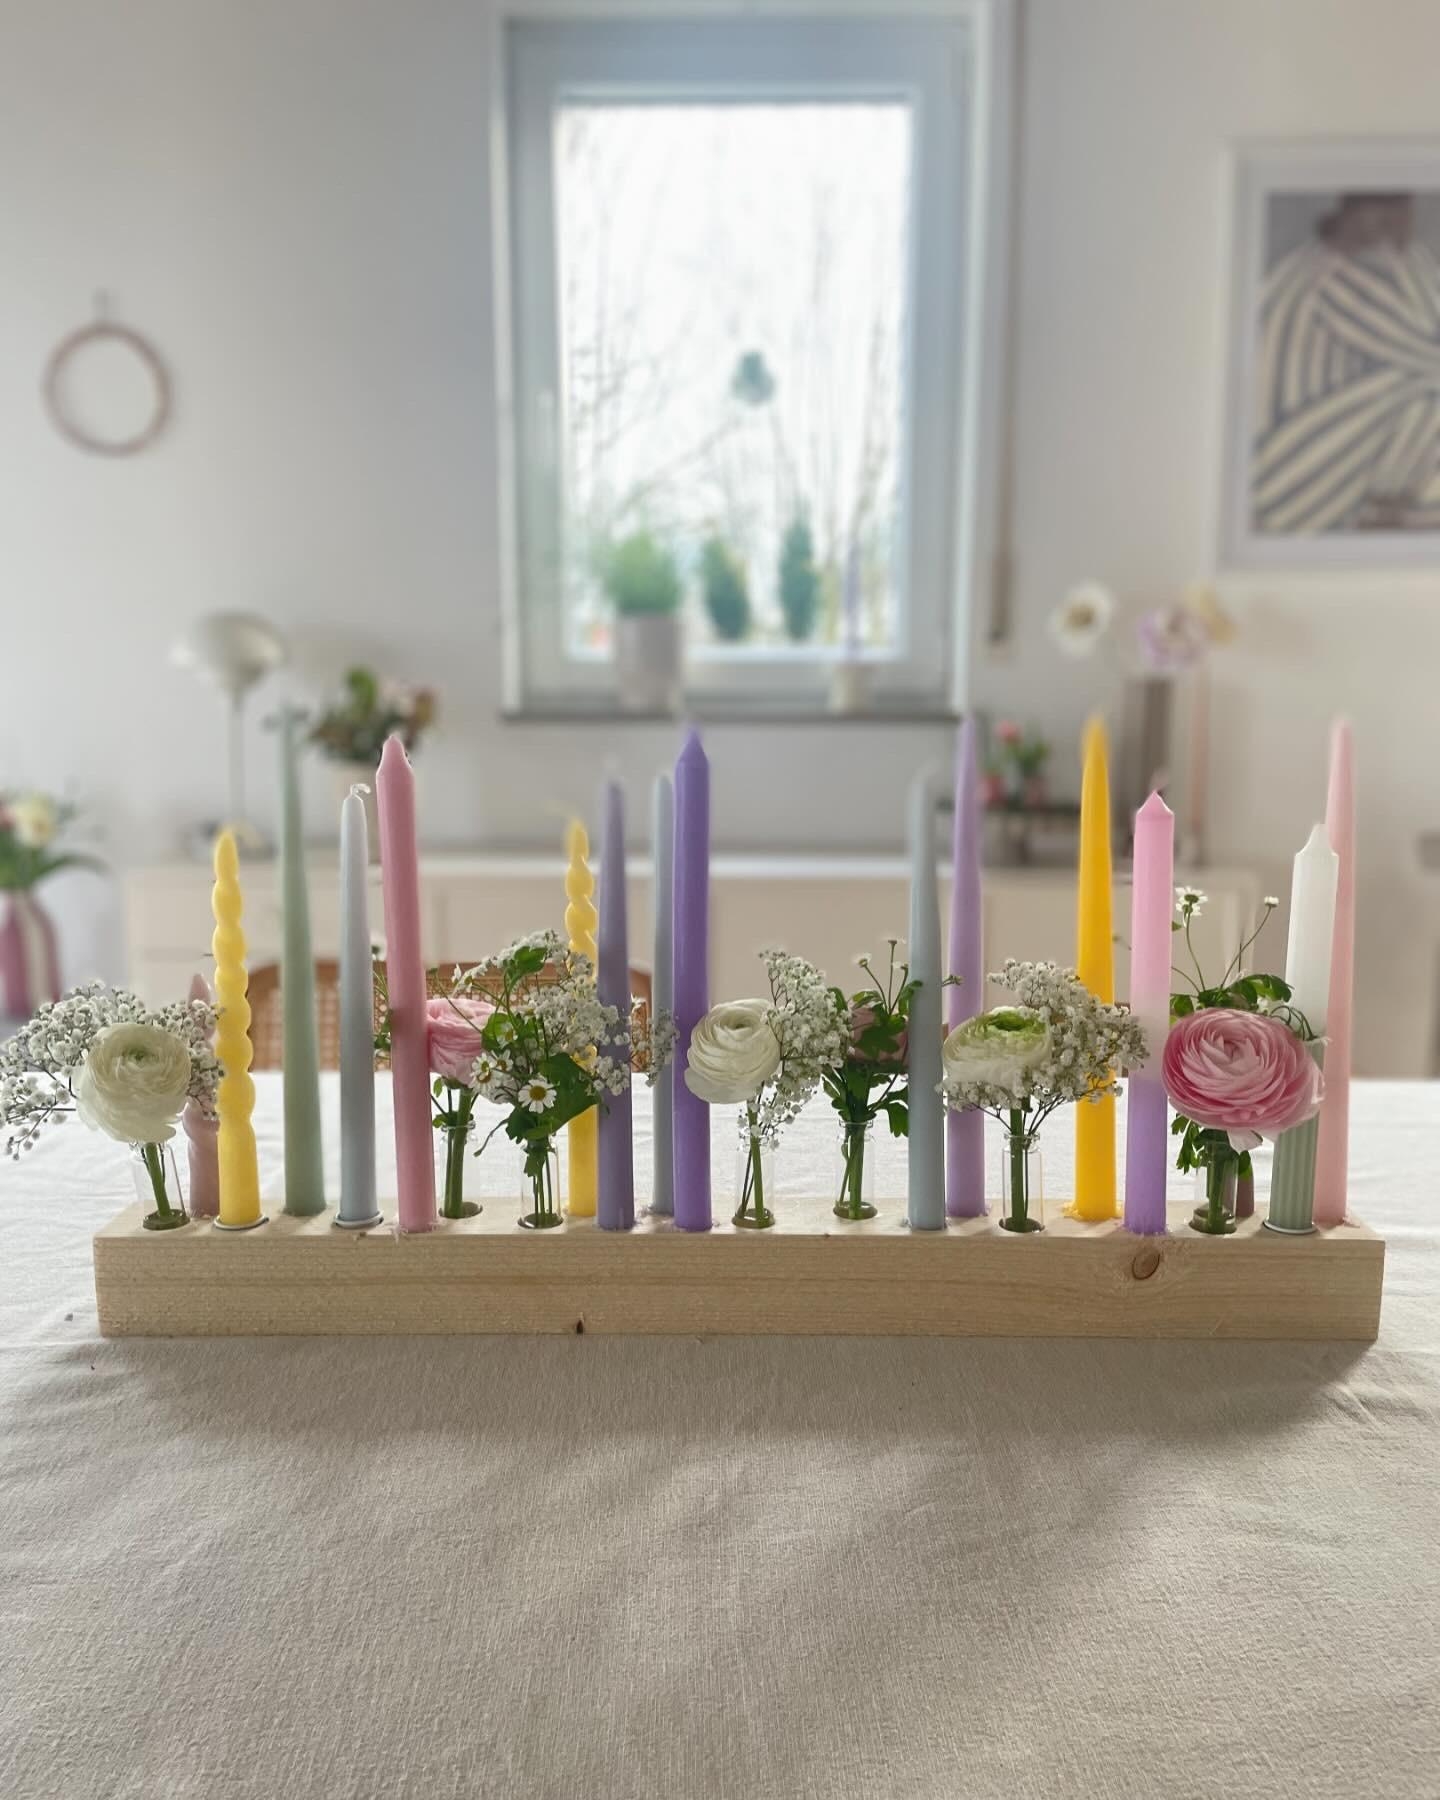 Mein DIY Kerzen/Blumenbrett ist das neue Lieblingsstück 💜
#kerzen#diy#selbstgemacht